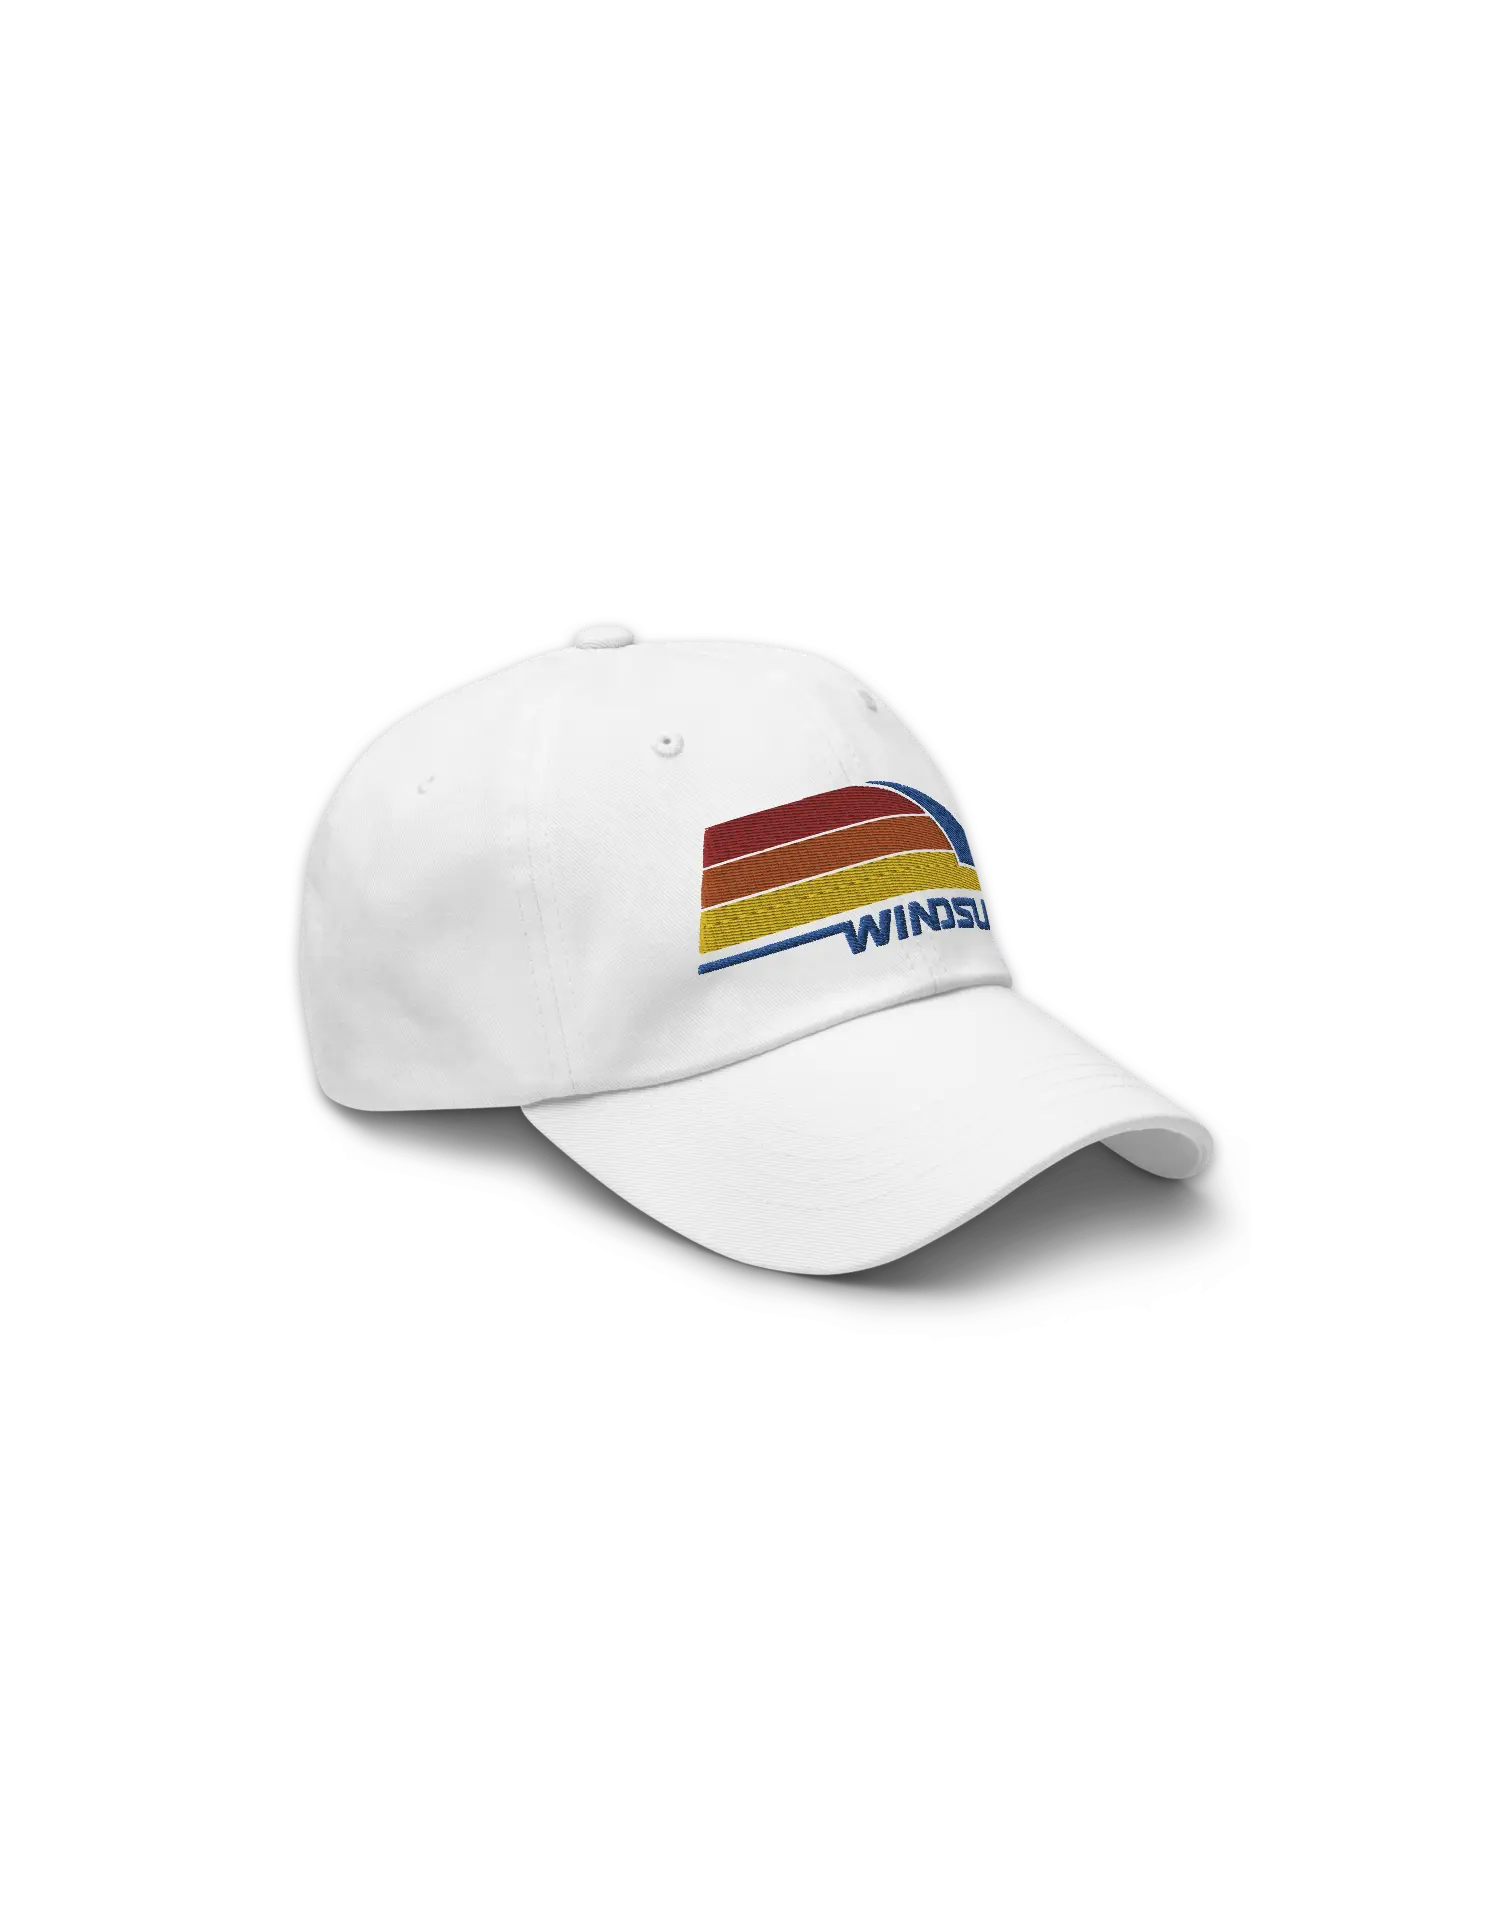 Windsurf Navy Dad Hat by KOAV